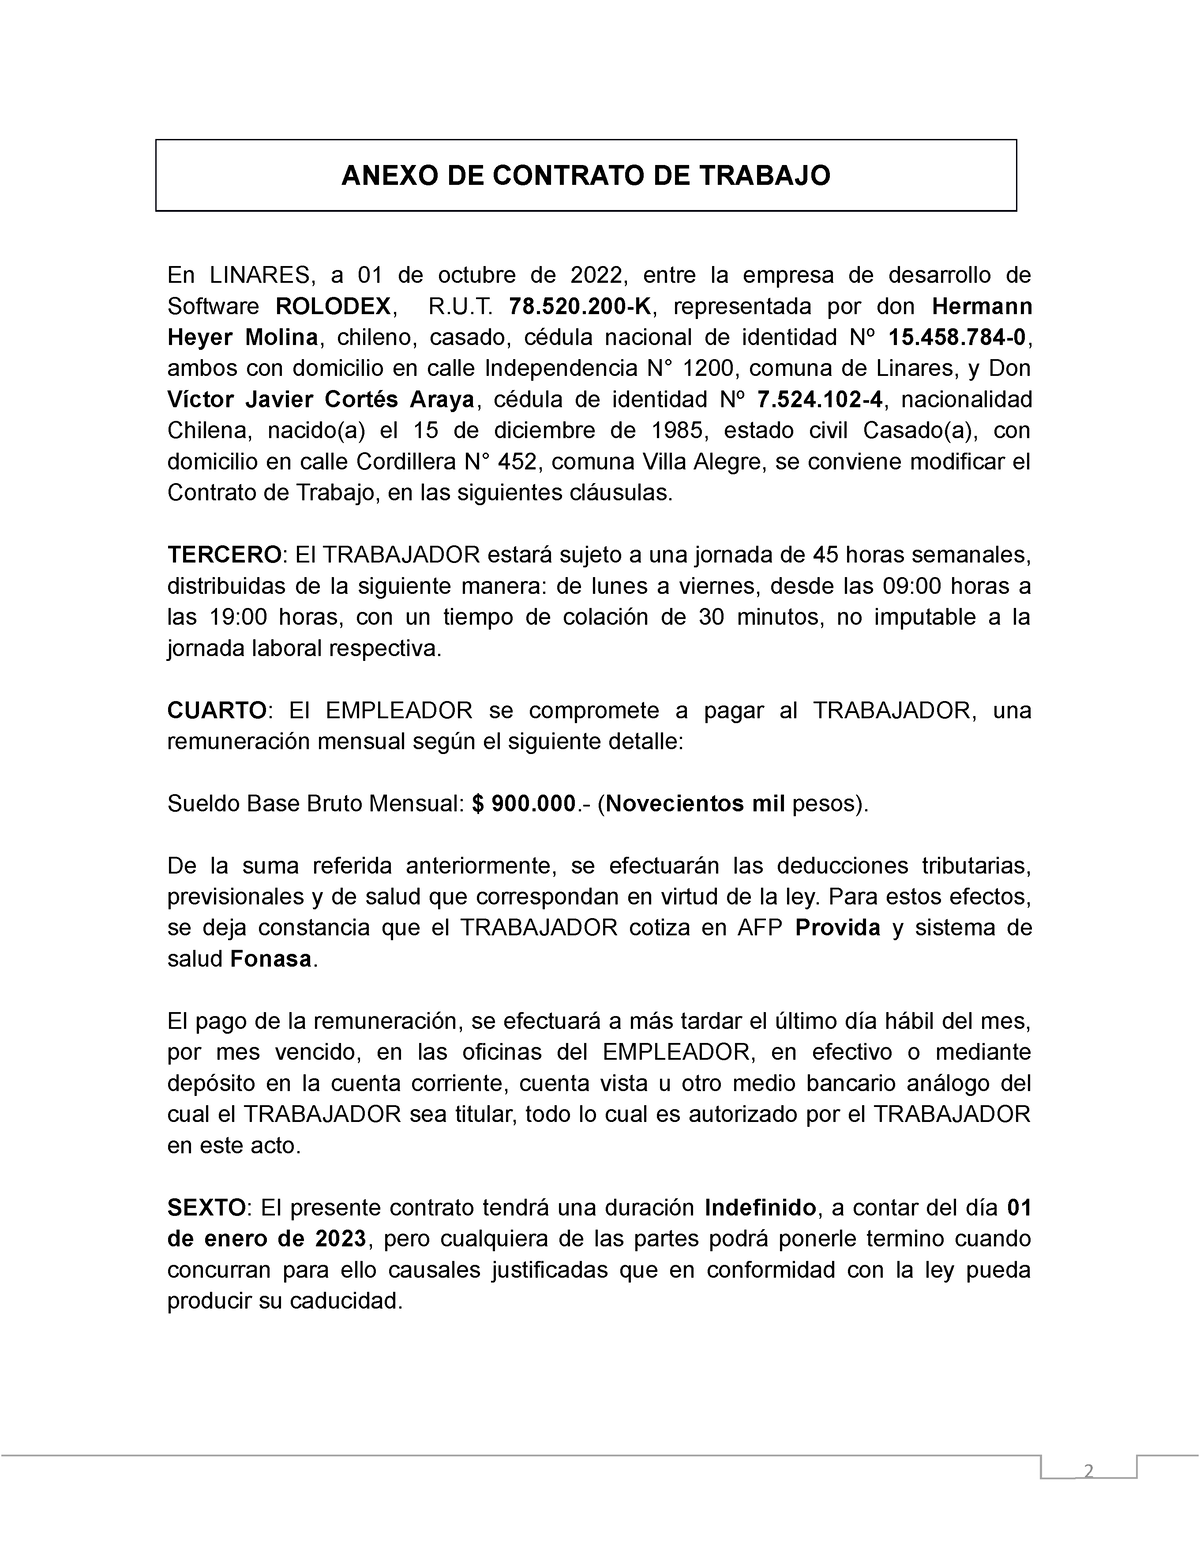 Anexo De Contrato De Trabajo 2 Anexo De Contrato De Trabajo En Linares A 01 De Octubre De 2956